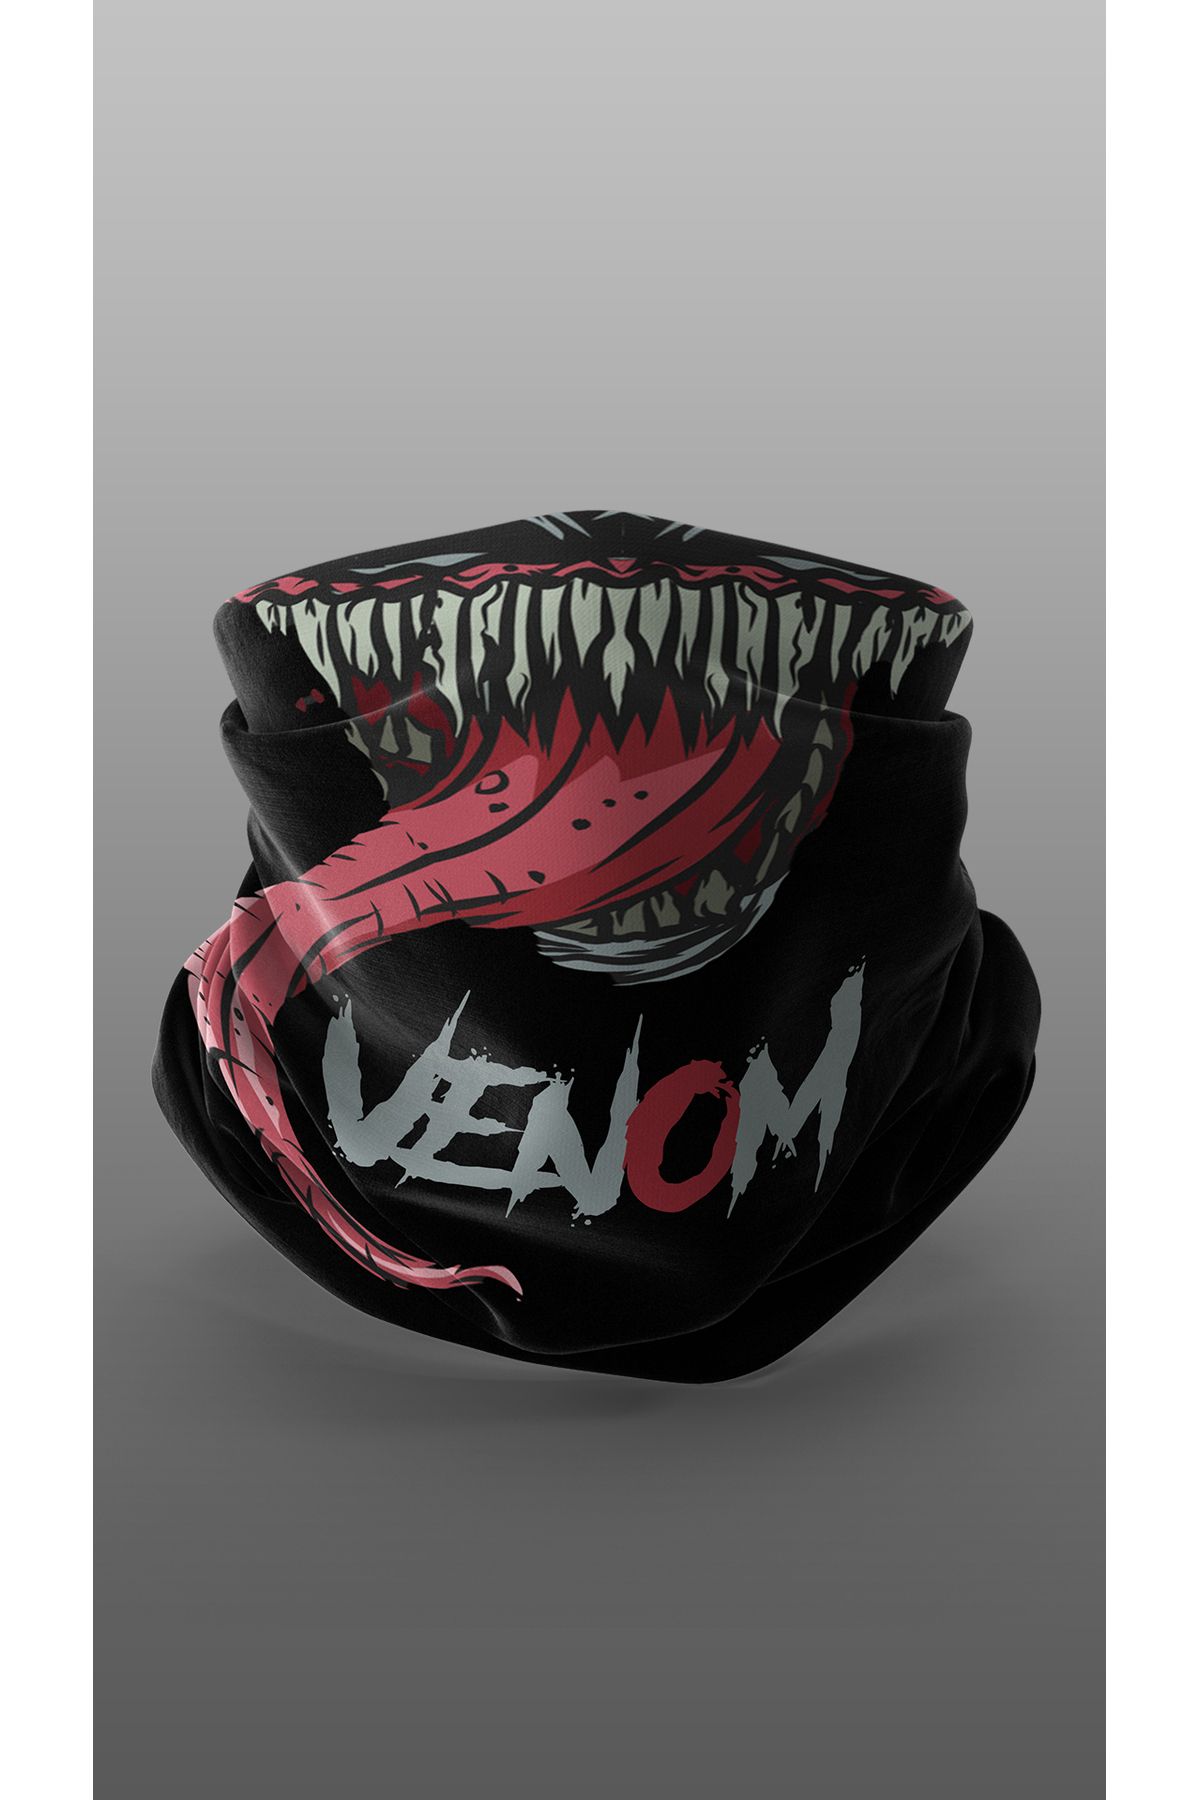 Yeles Venom Motorcu Buff Maske Outdoor Boyunluk Unisex Bandana